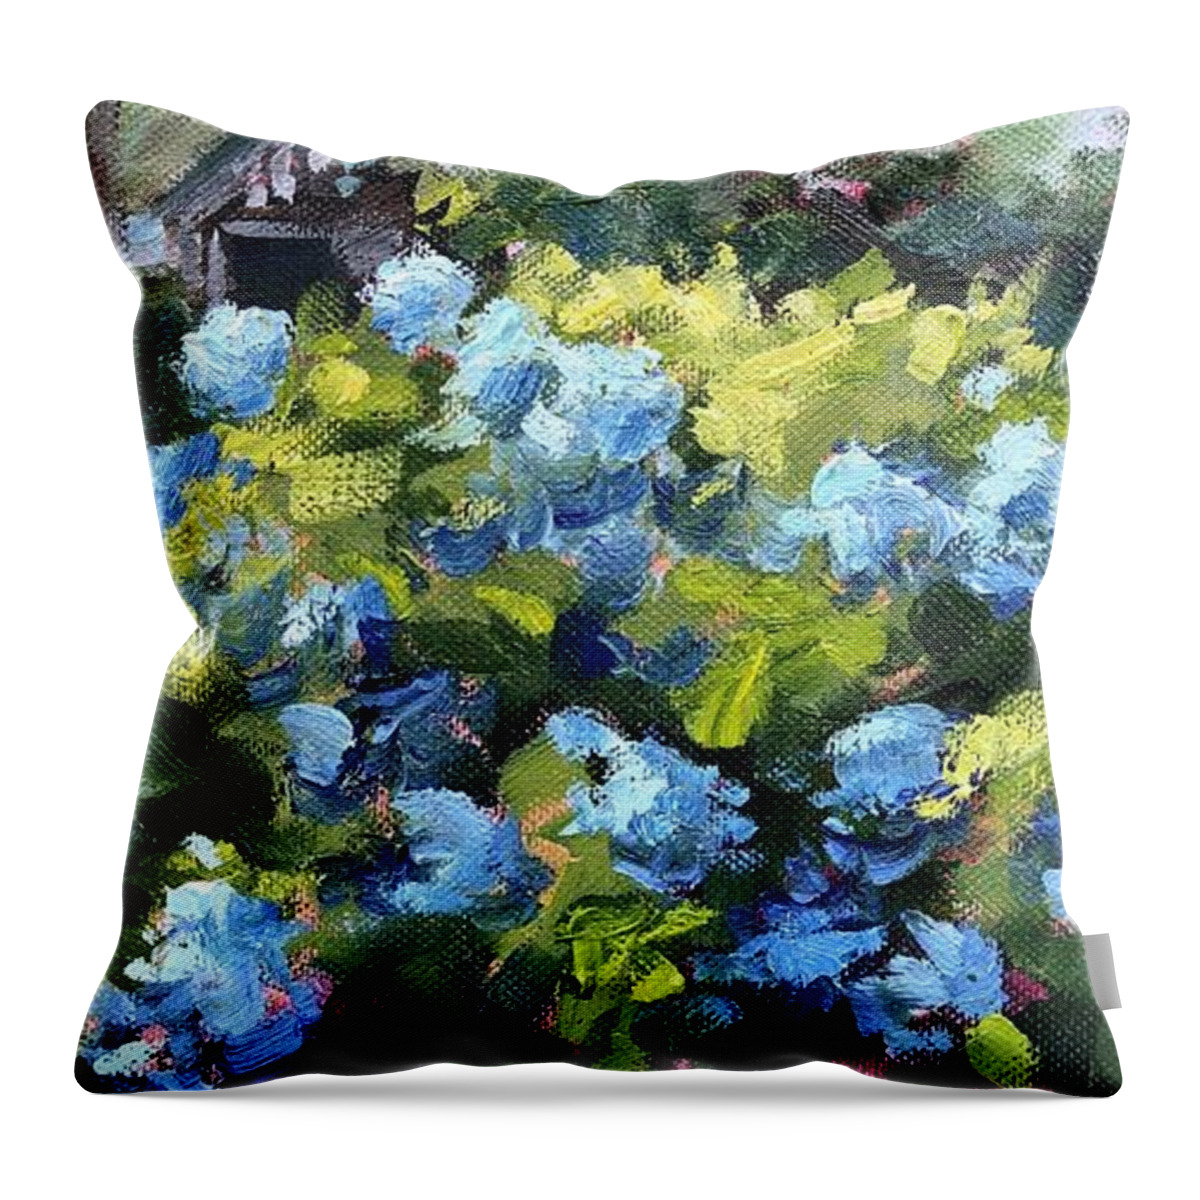 Cape Cod Garden Throw Pillow featuring the painting Hydrangea Bonanza by Barbara Hageman